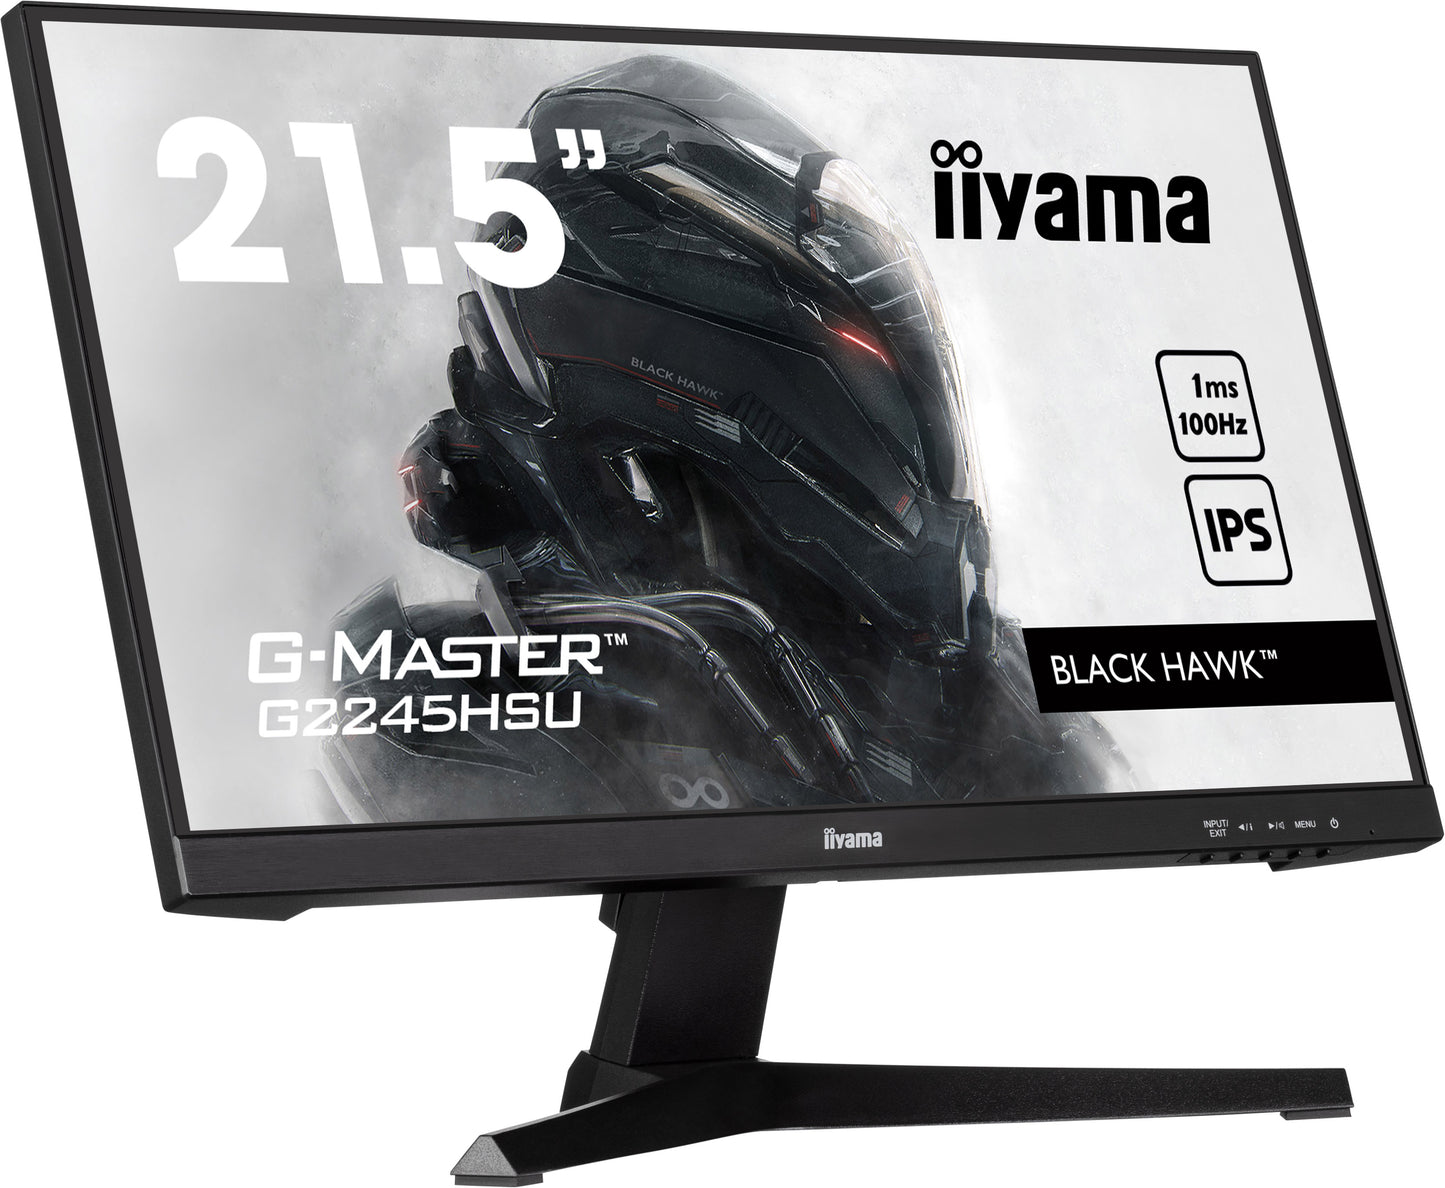 iiyama G-Master G2245HSU-B1 21.5" IPS panel technology, a 100Hz refresh rate, and an ultra-swift 1ms MPRT response time.